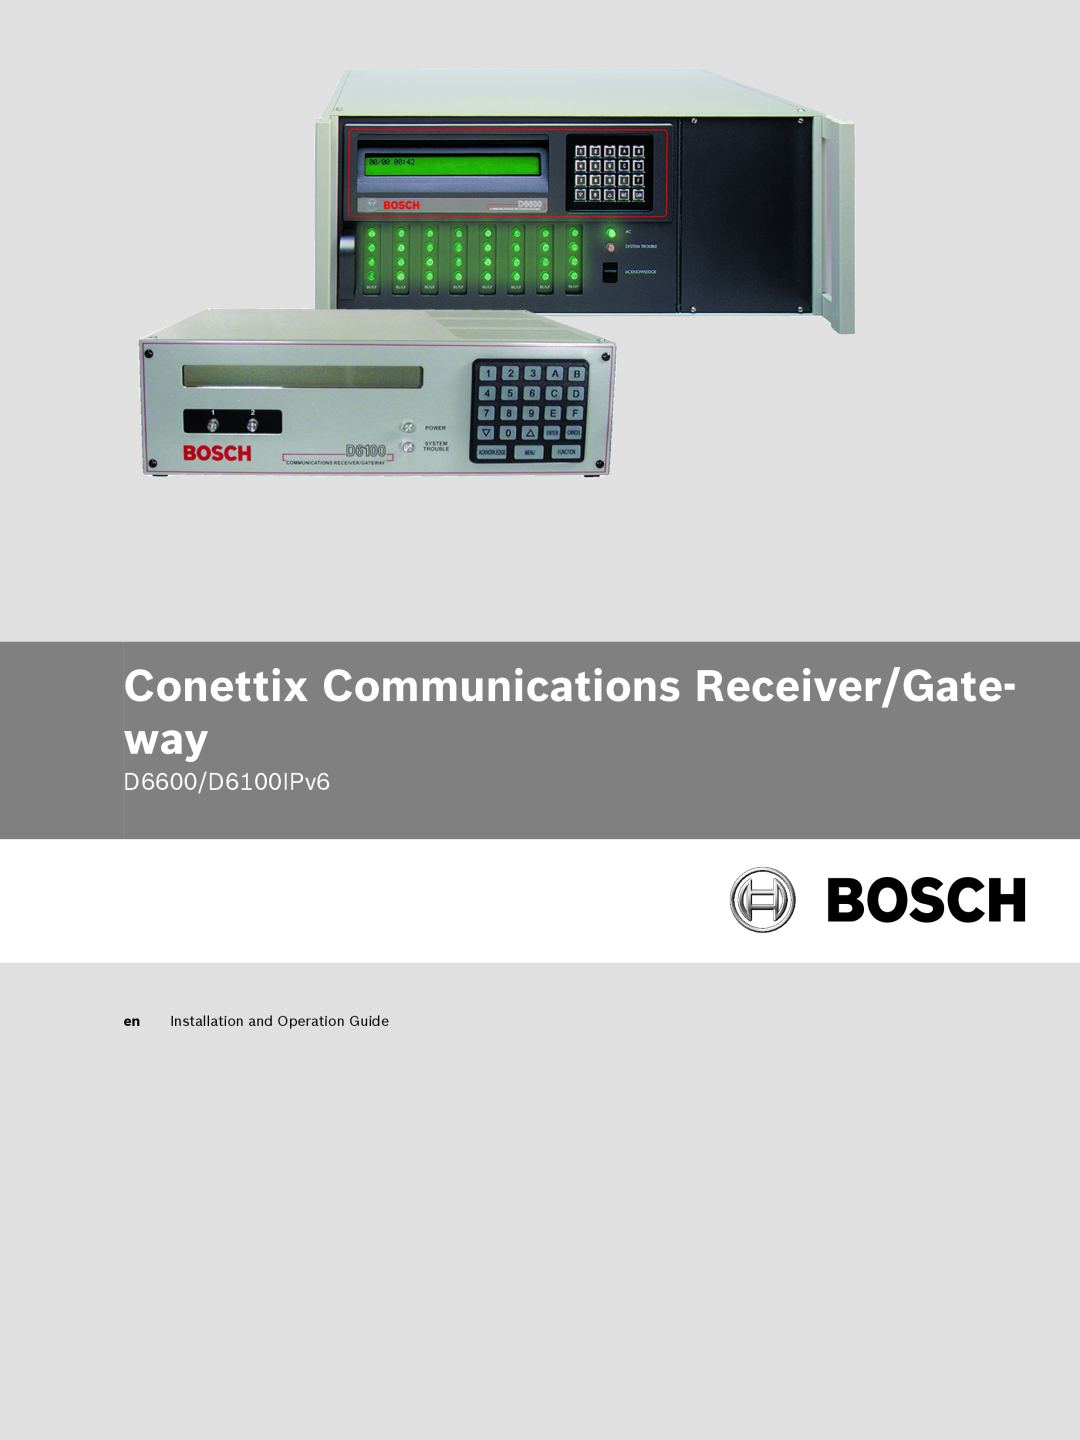 Bosch Appliances manual Computer Interface Manual, Conettix D6600/D6100, Receiver/Gateway 